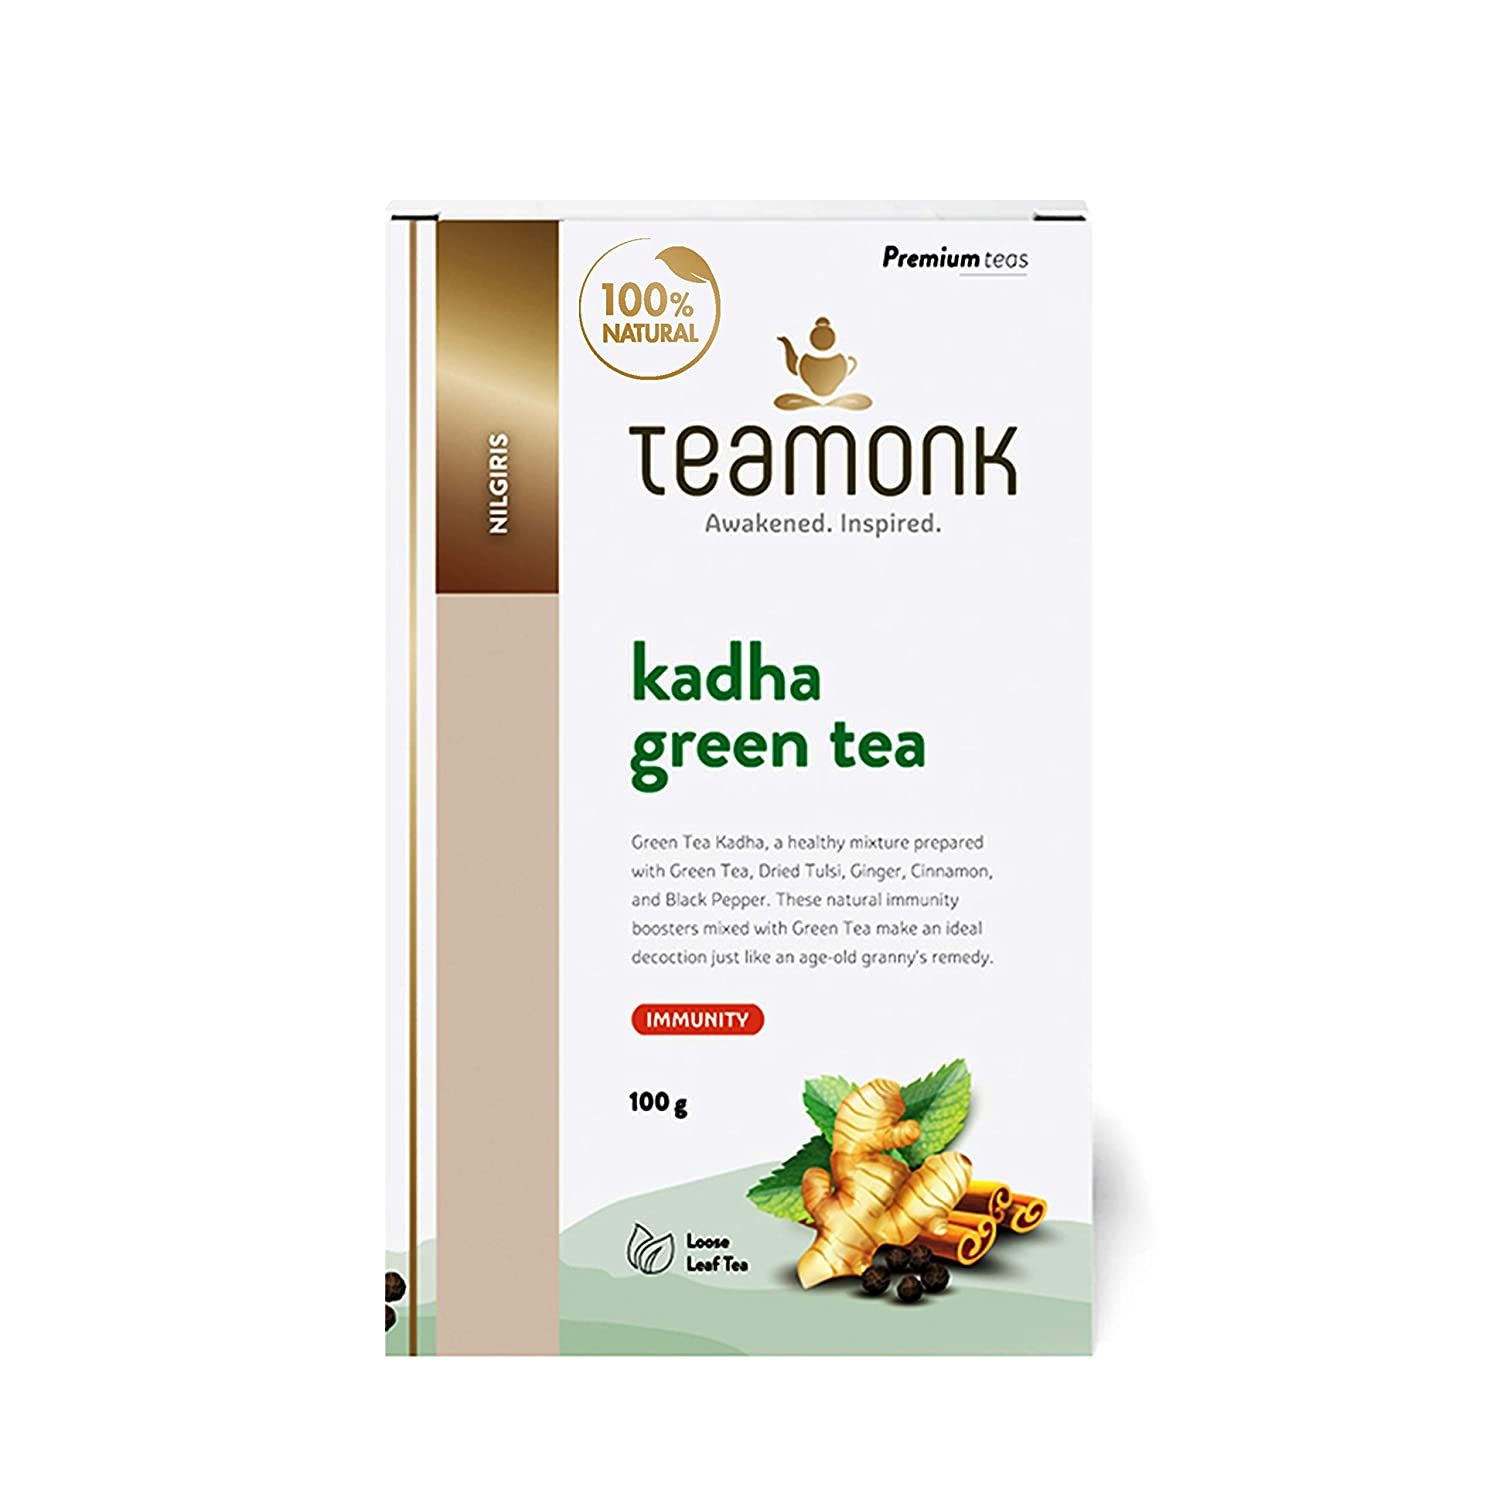 Teamonk Kadha Green Tea Image